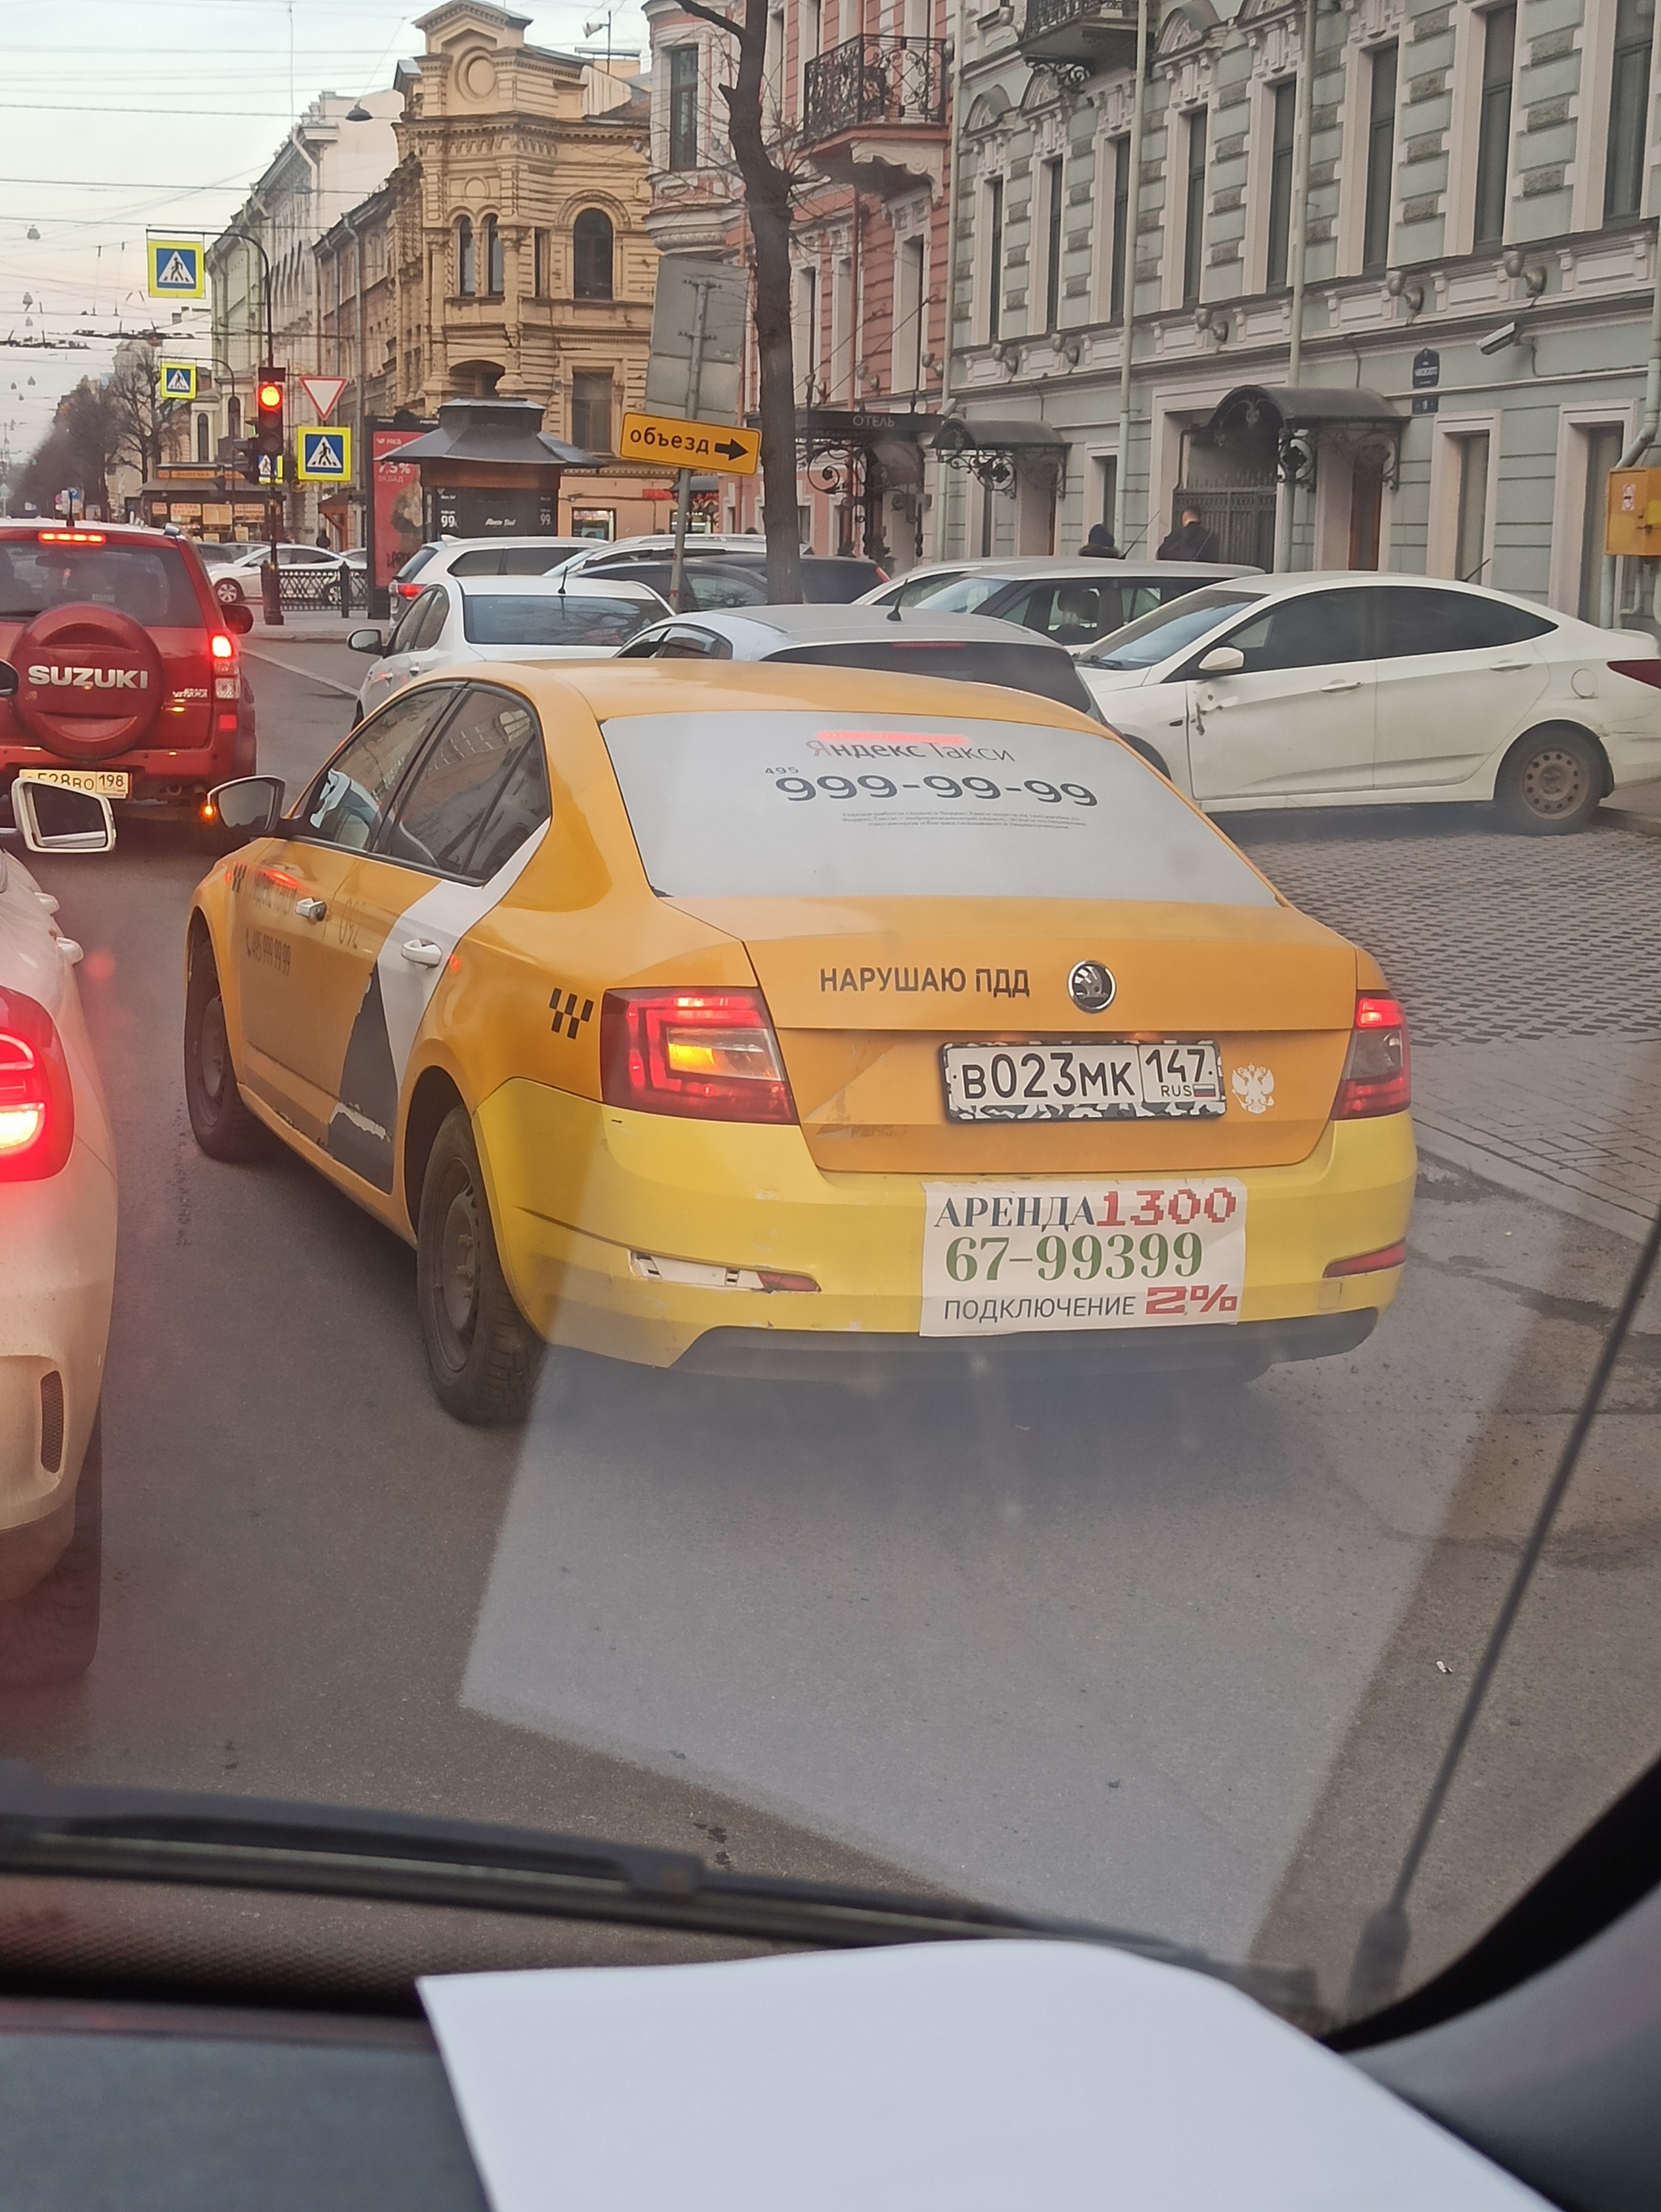 But honestly... - My, Taxi, Danger, Saint Petersburg